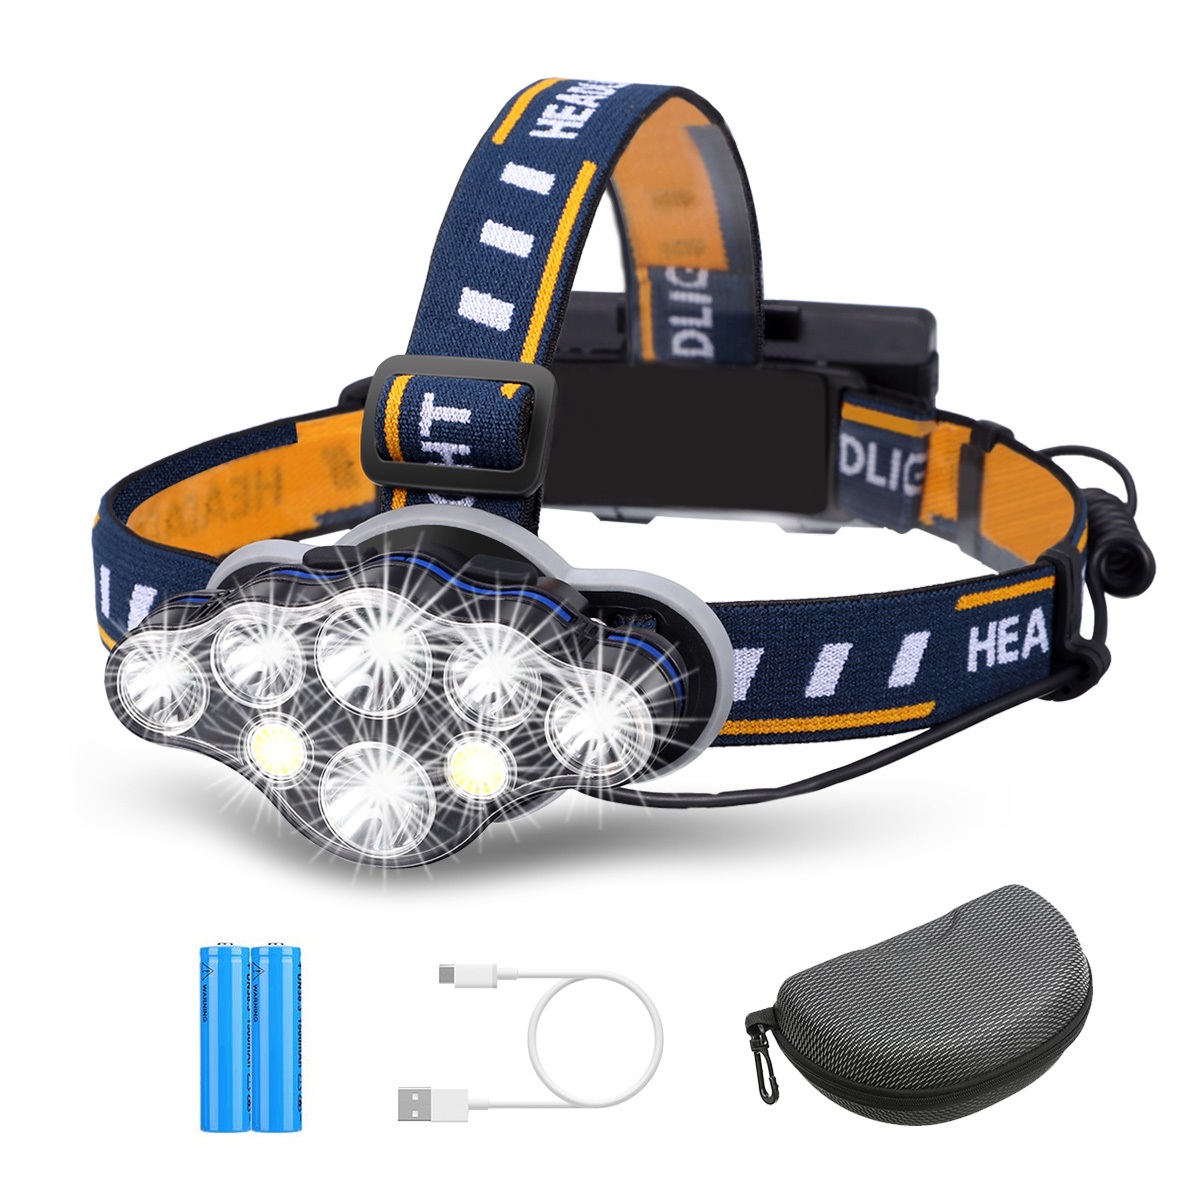 Super bright led Headlamp headlight flashlight USB rechargeable Work Light